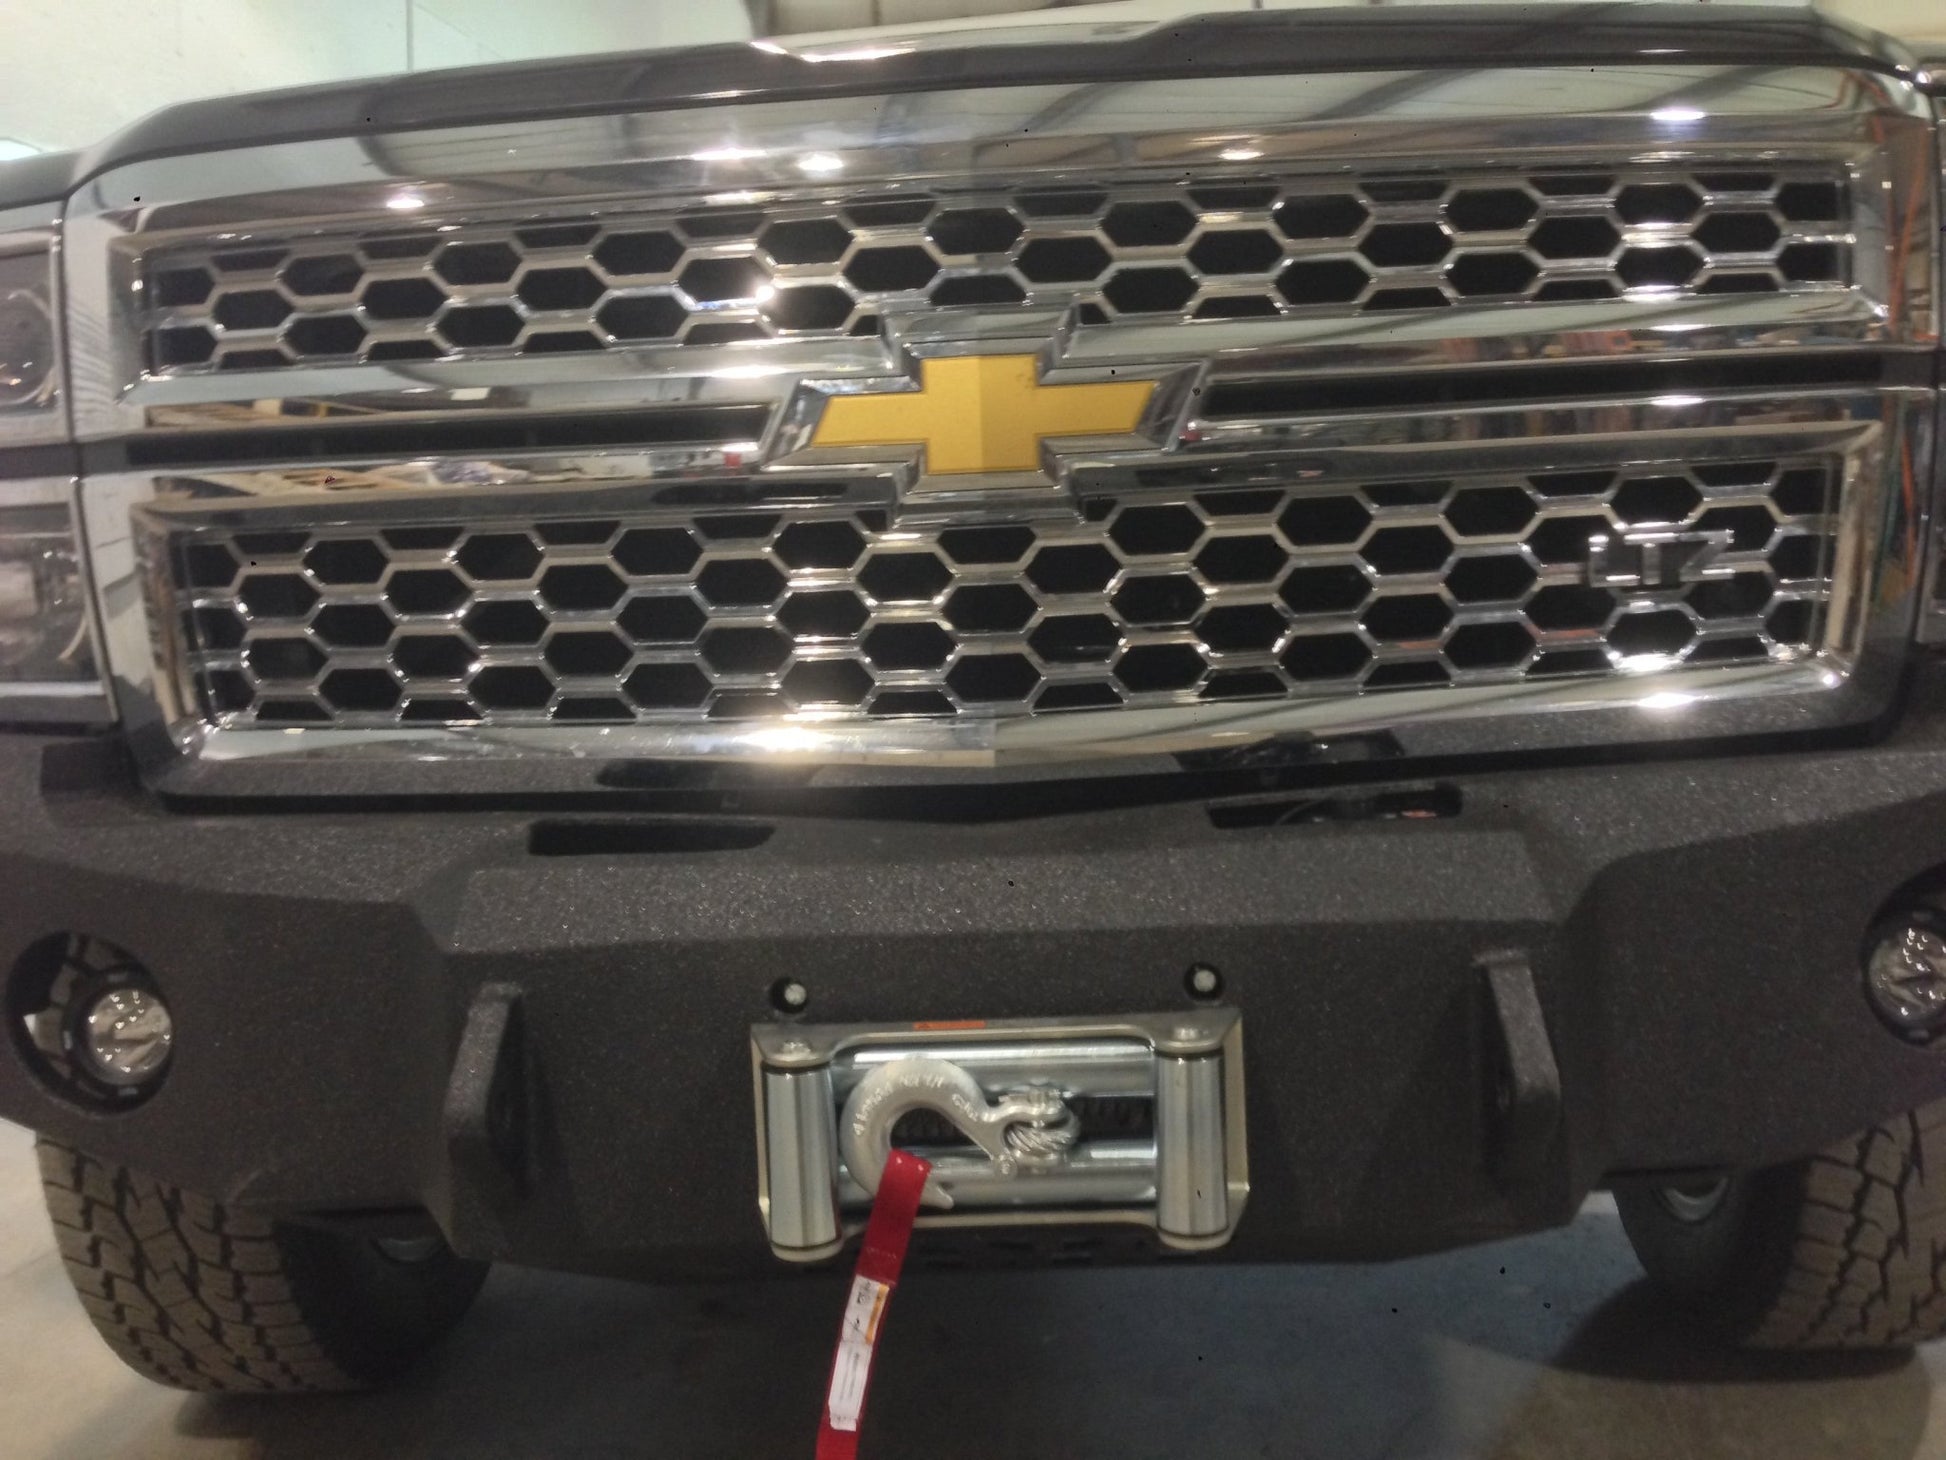 2014-2015 Chevrolet Silverado 1500 Front Bumper | Parking Sensor Cutouts Available - Iron Bull BumpersFRONT IRON BUMPER